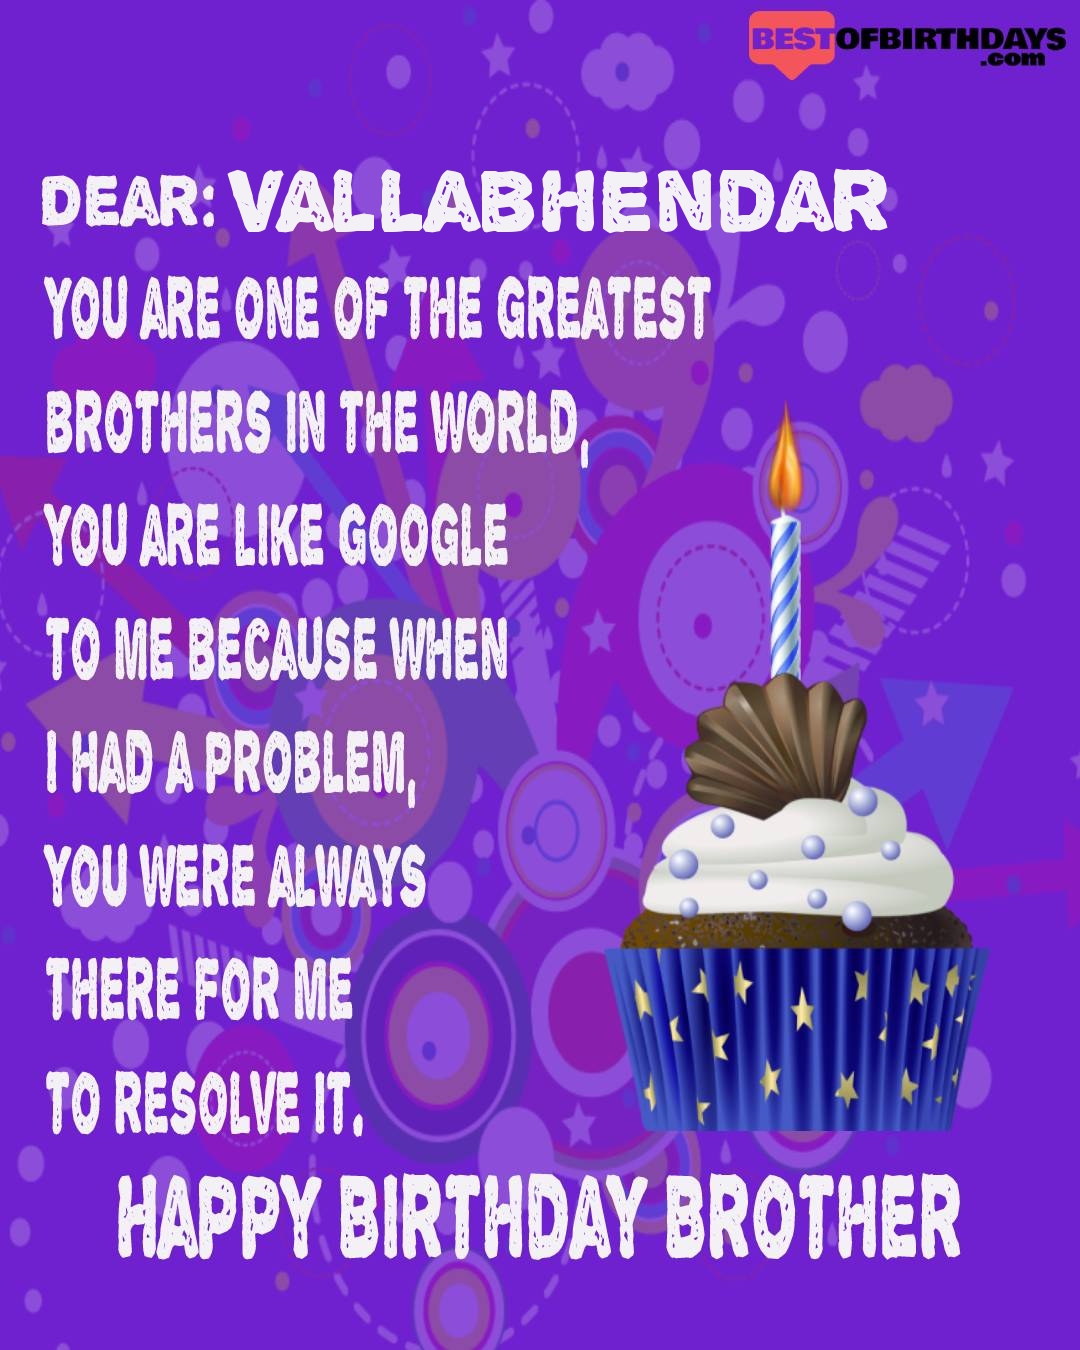 Happy birthday vallabhendar bhai brother bro